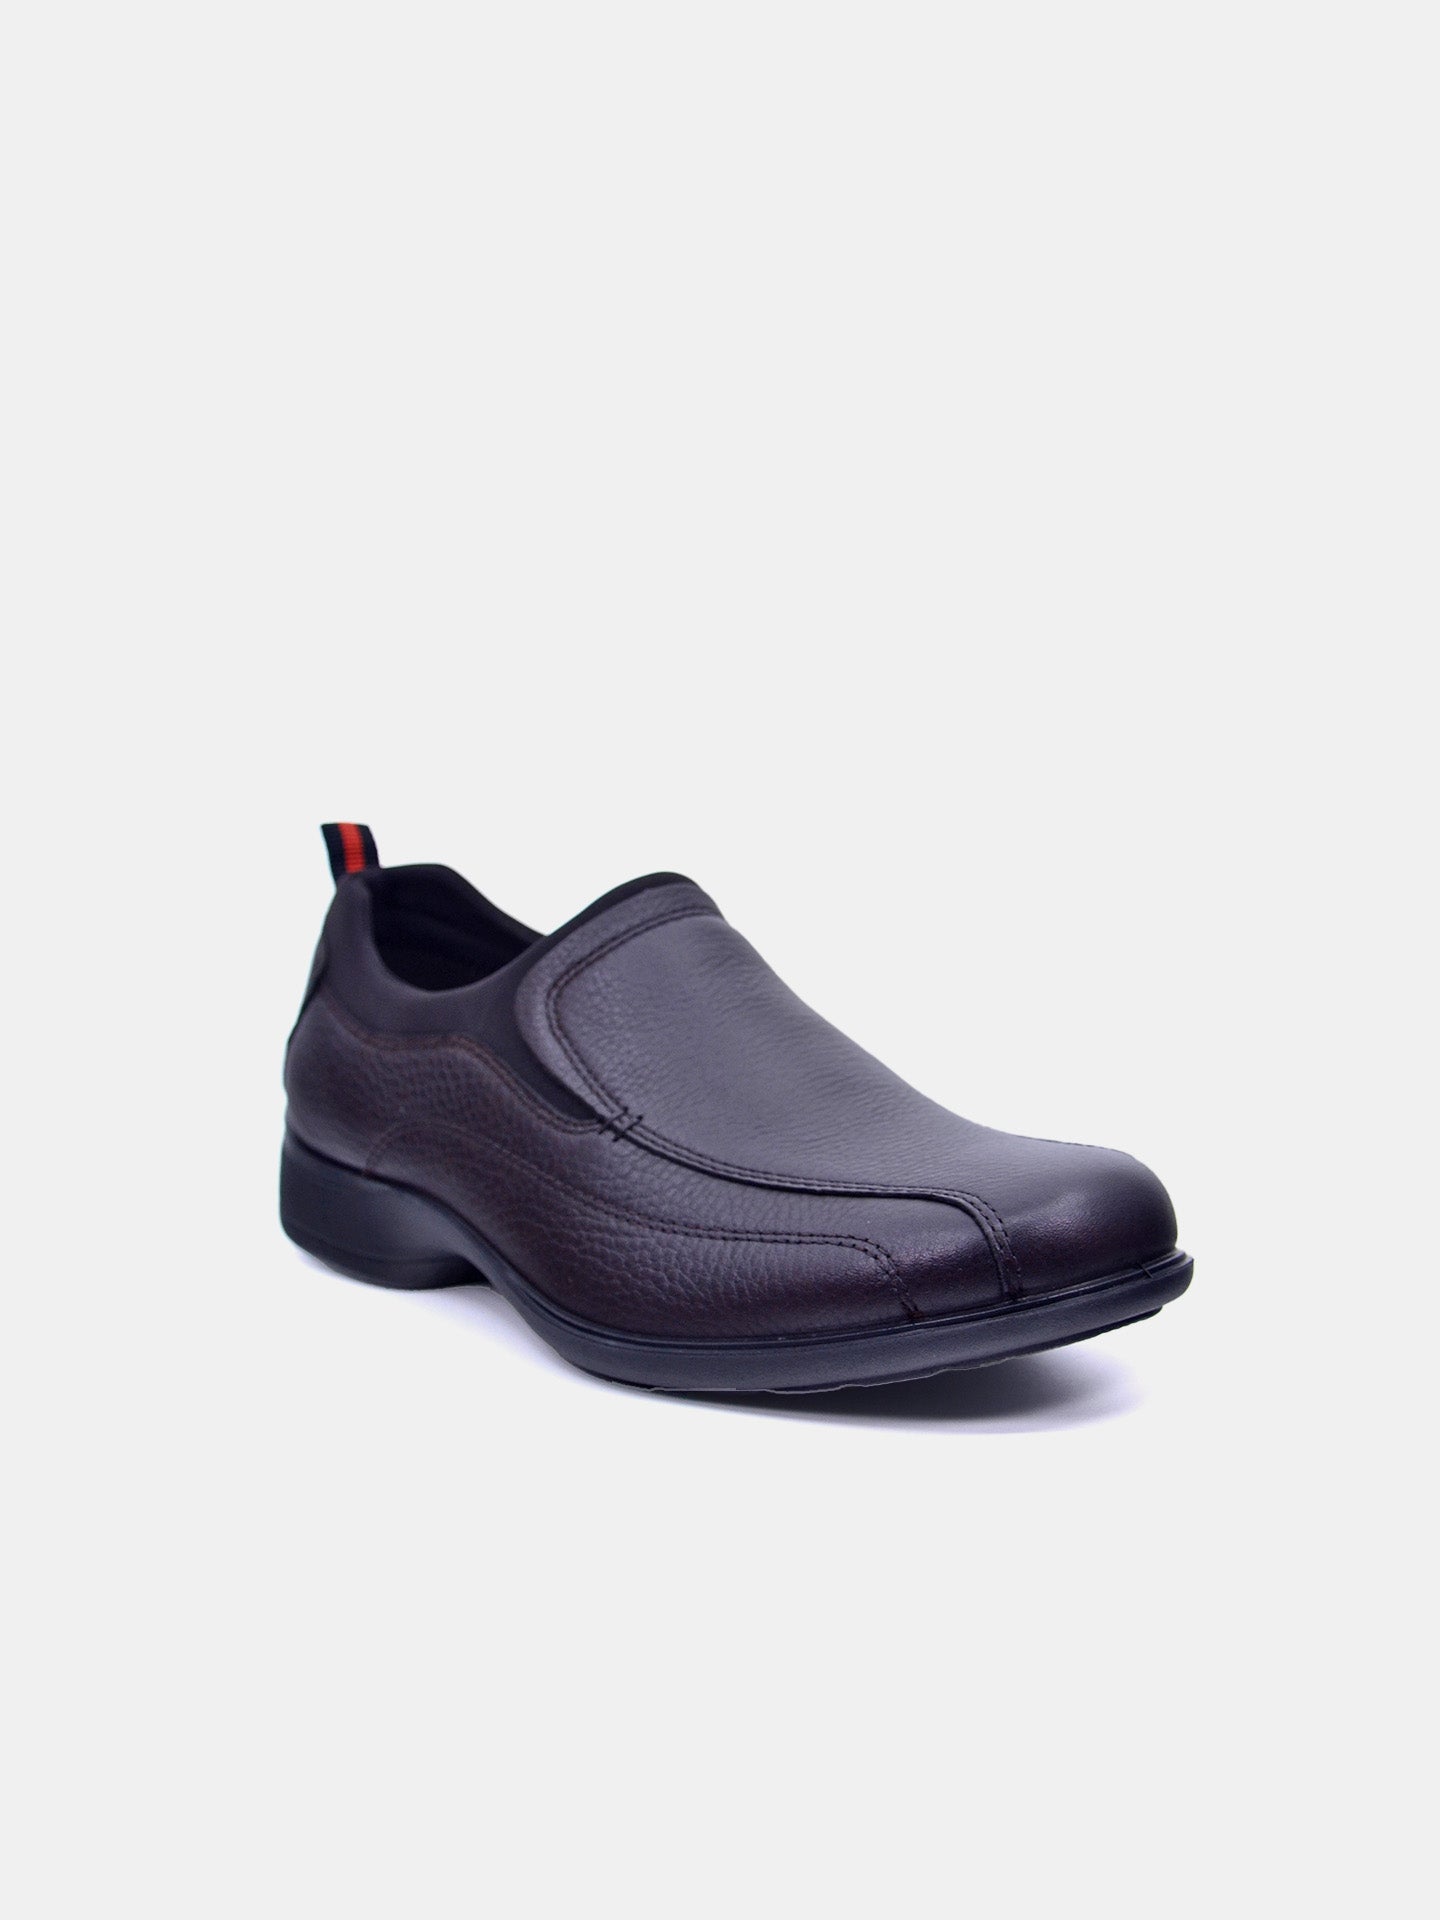 Josef Seibel M406-02 Men's Casual Shoes